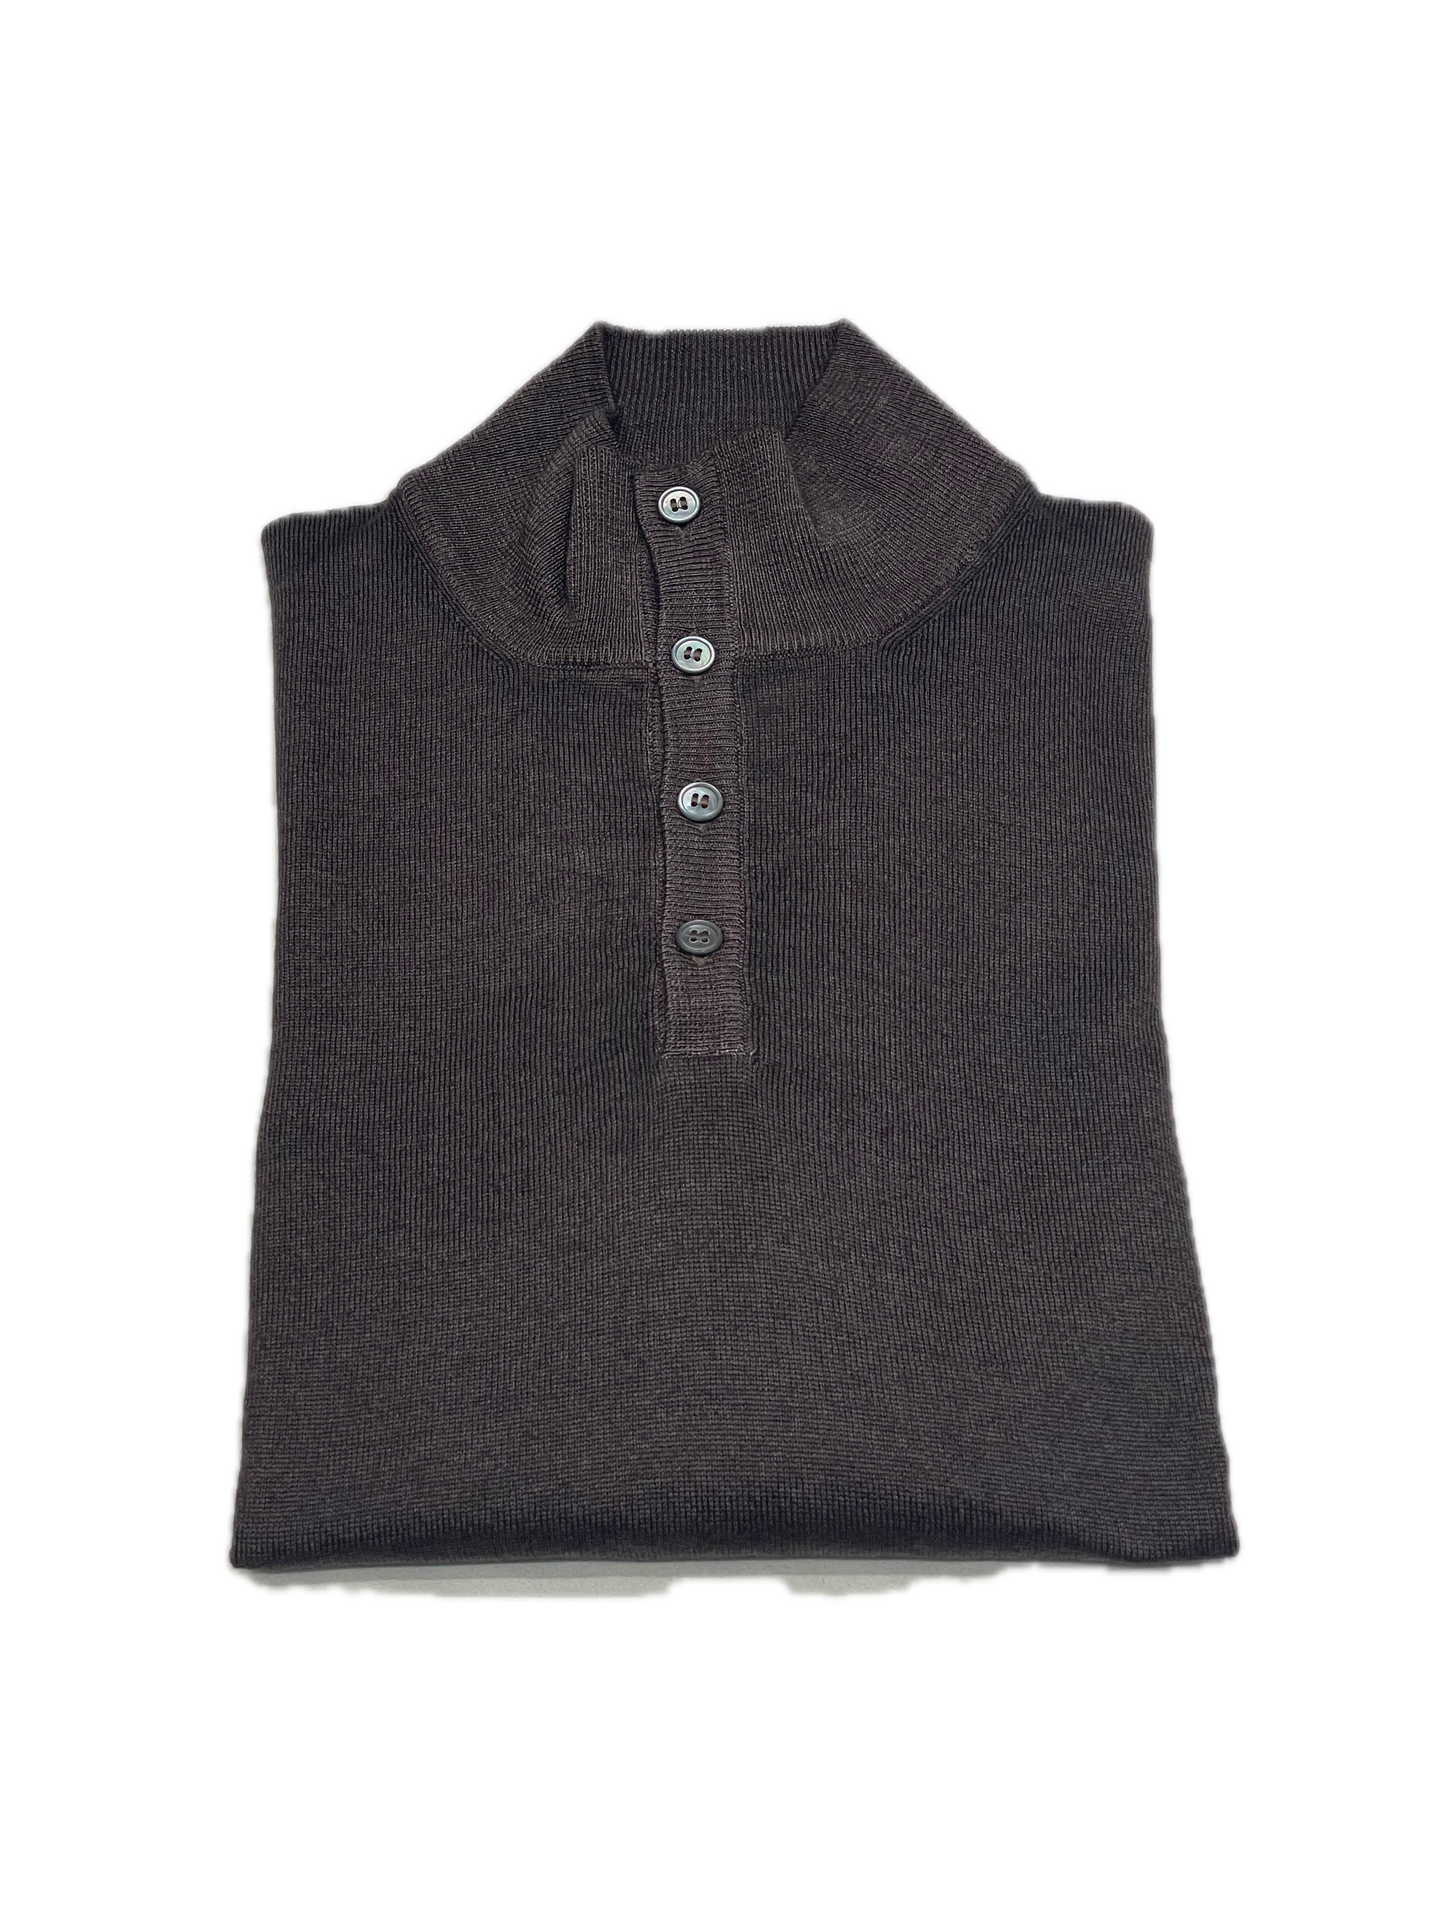 Button neck pullover in Brown vintage merino wool